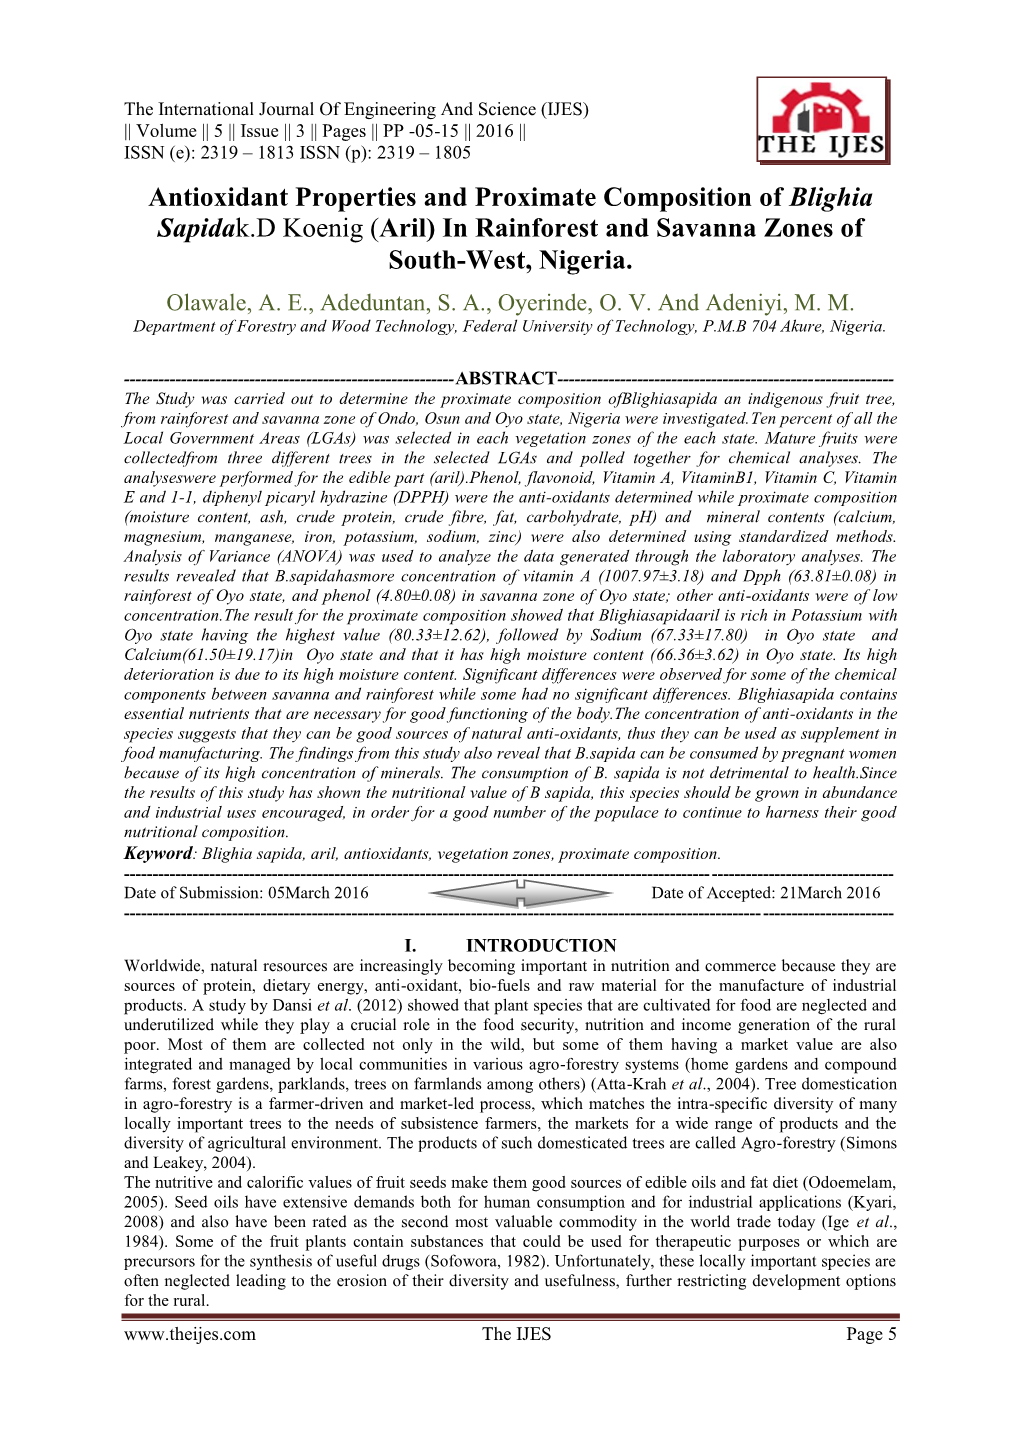 Antioxidant Properties and Proximate Composition of Blighia Sapidak.D Koenig (Aril) in Rainforest and Savanna Zones of South-West, Nigeria